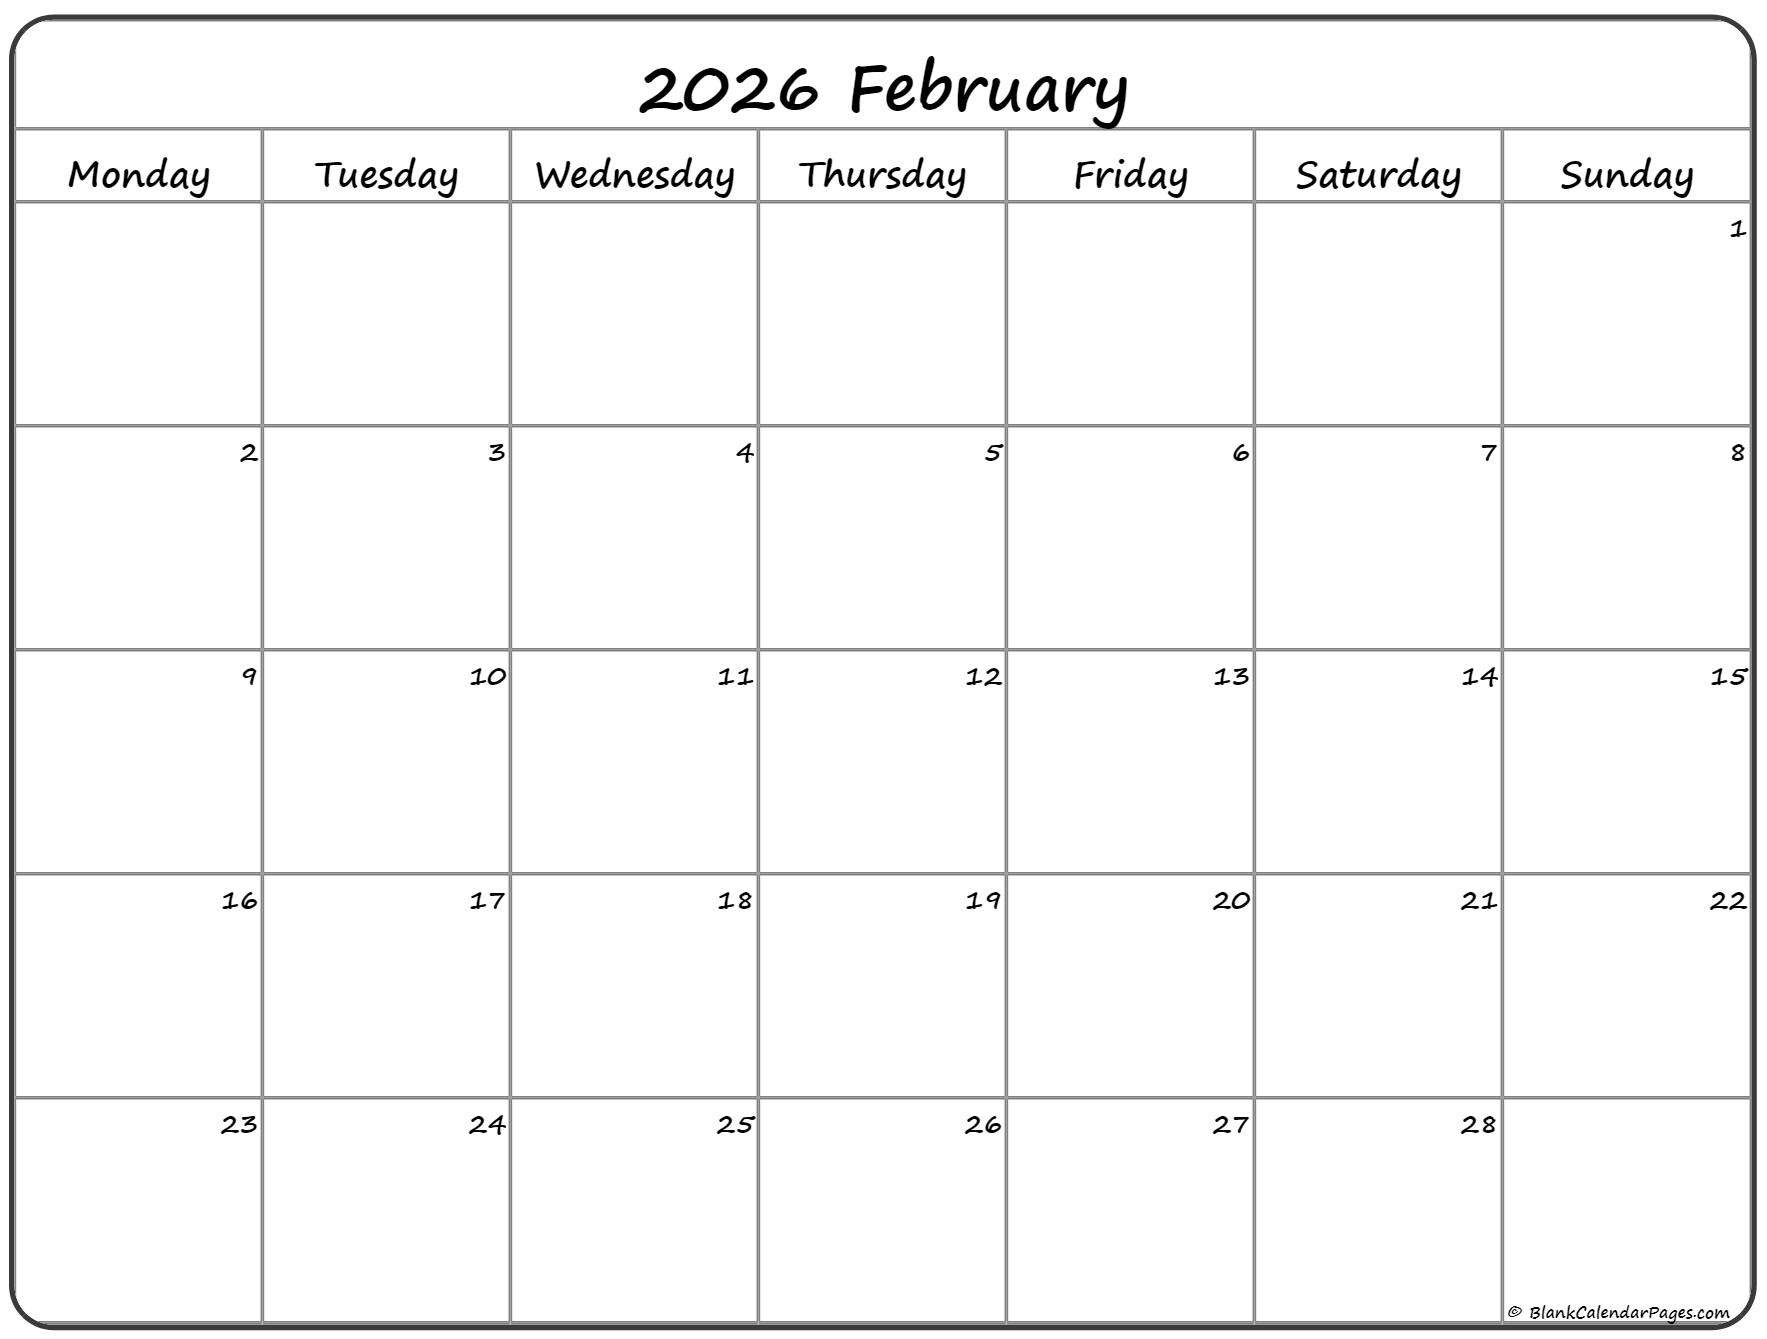 February 2026 Monday Calendar | Monday to Sunday